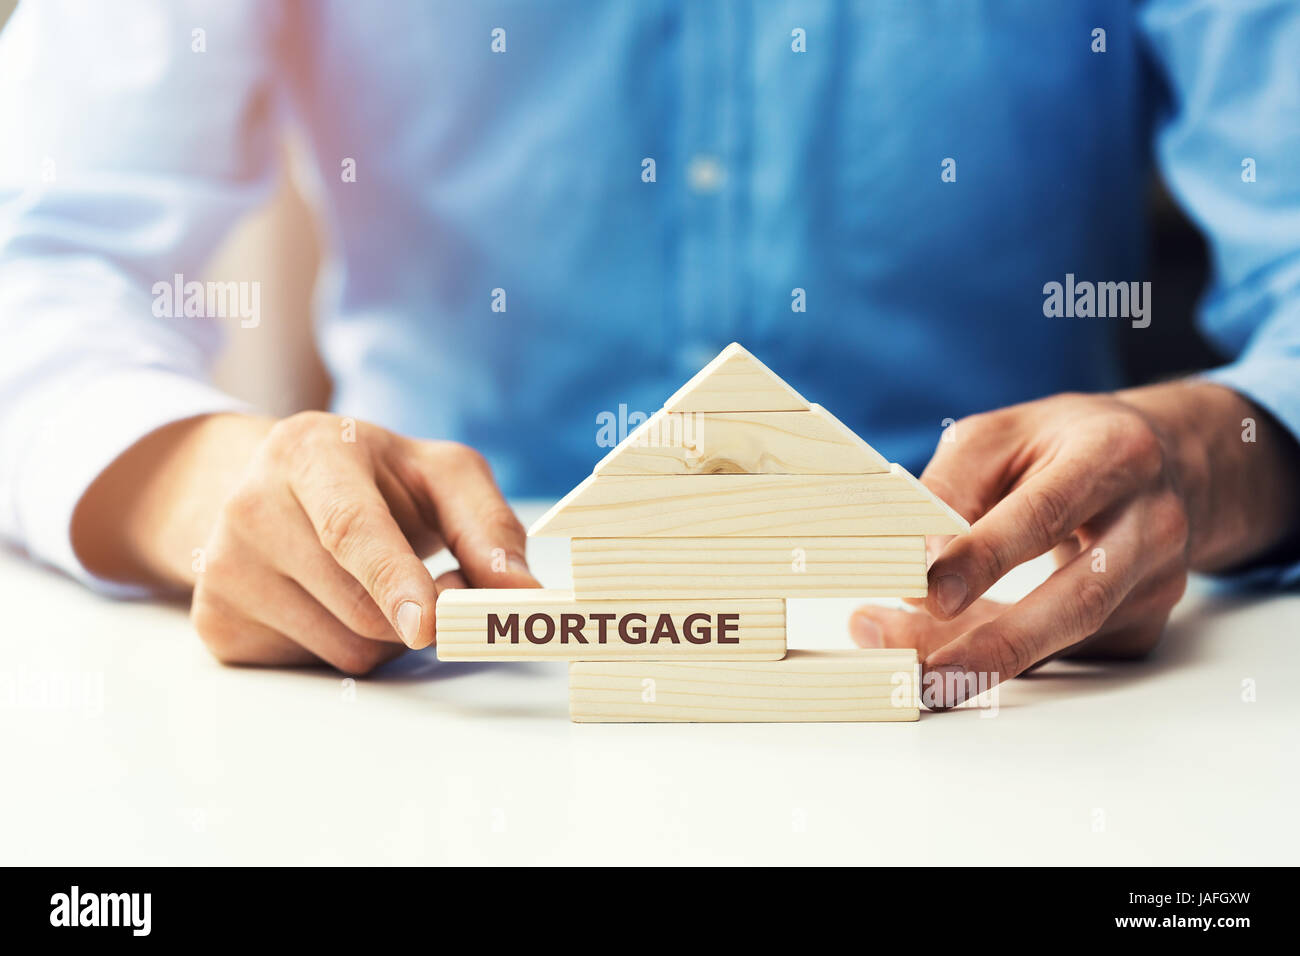 mortgage concept Stock Photo